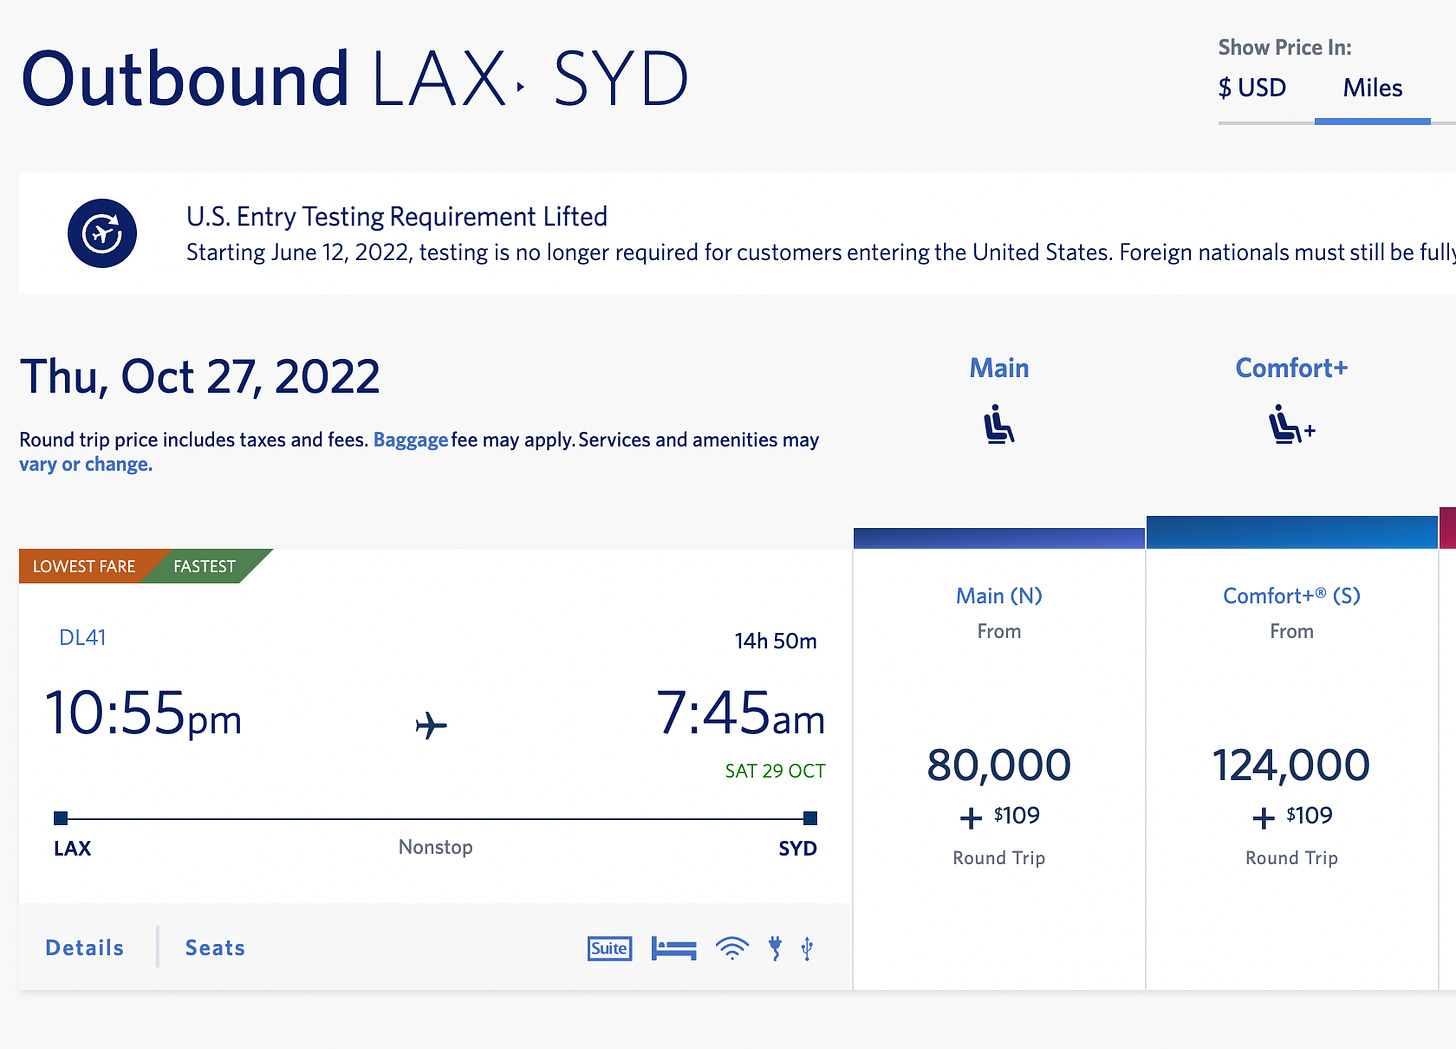 Delta Flight from LAX to SYD